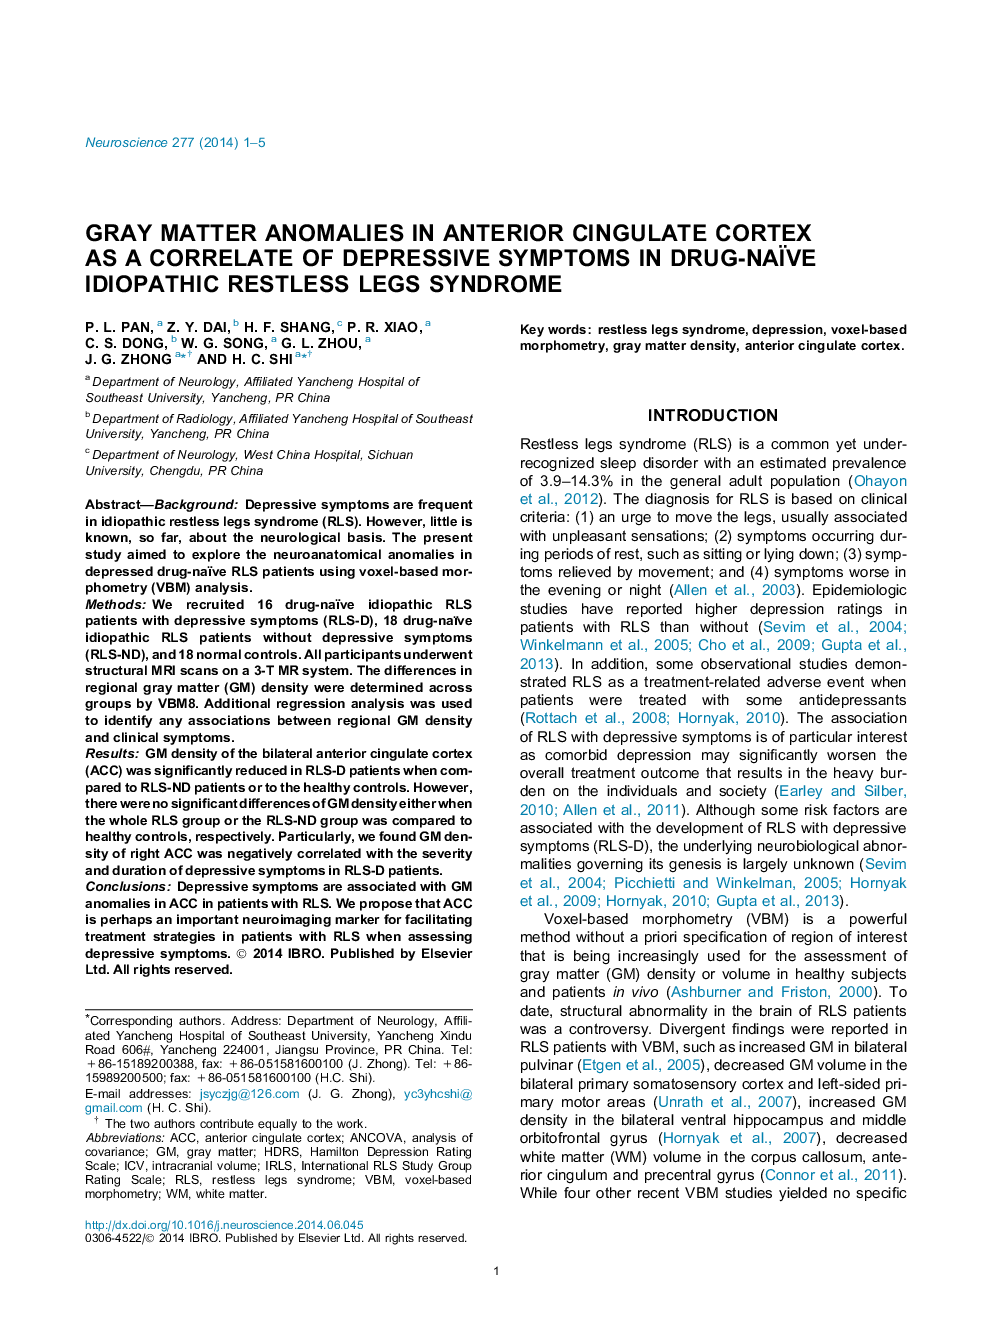 Gray matter anomalies in anterior cingulate cortex as a correlate of depressive symptoms in drug-naïve idiopathic restless legs syndrome